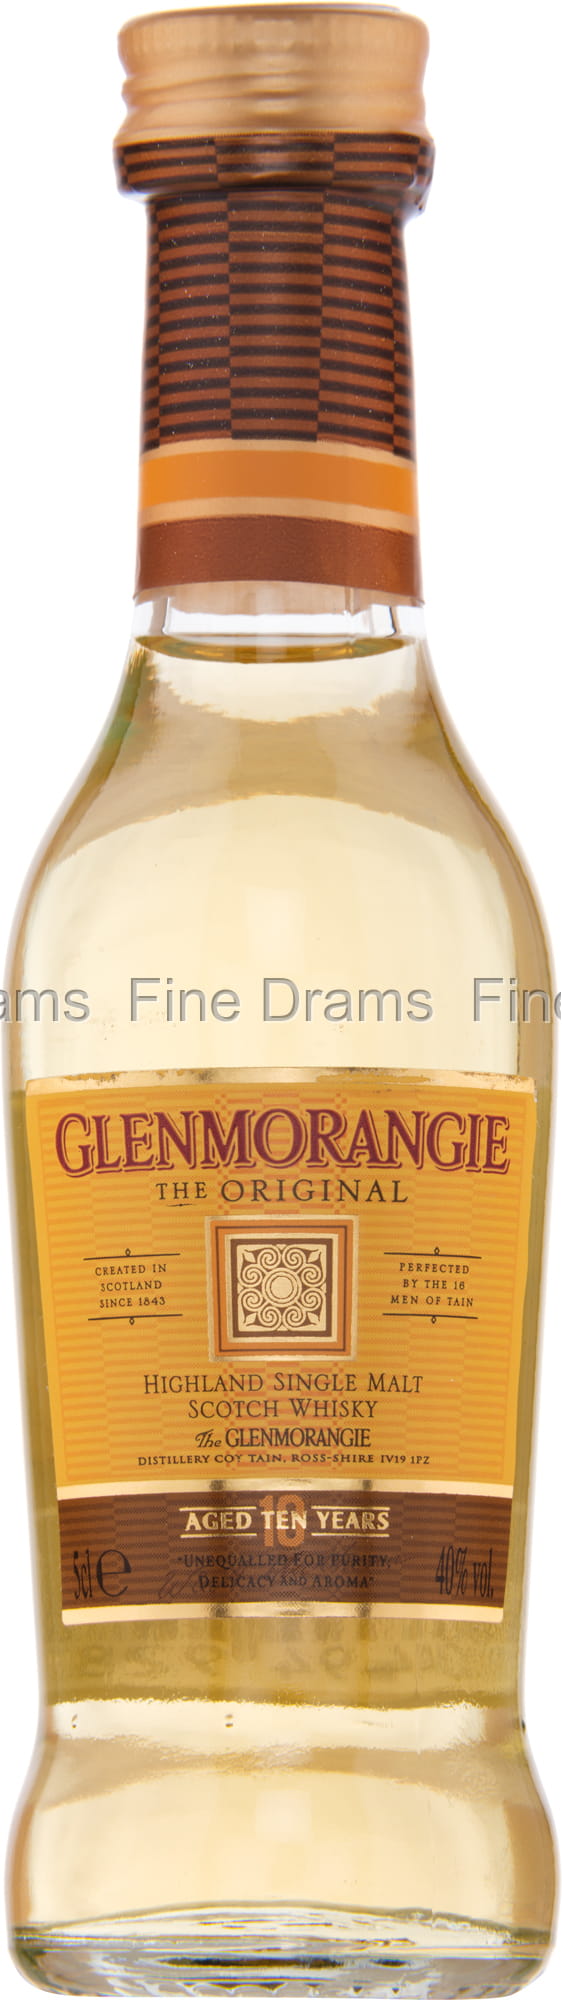 Glenmorangie 10 Year Old, The Original